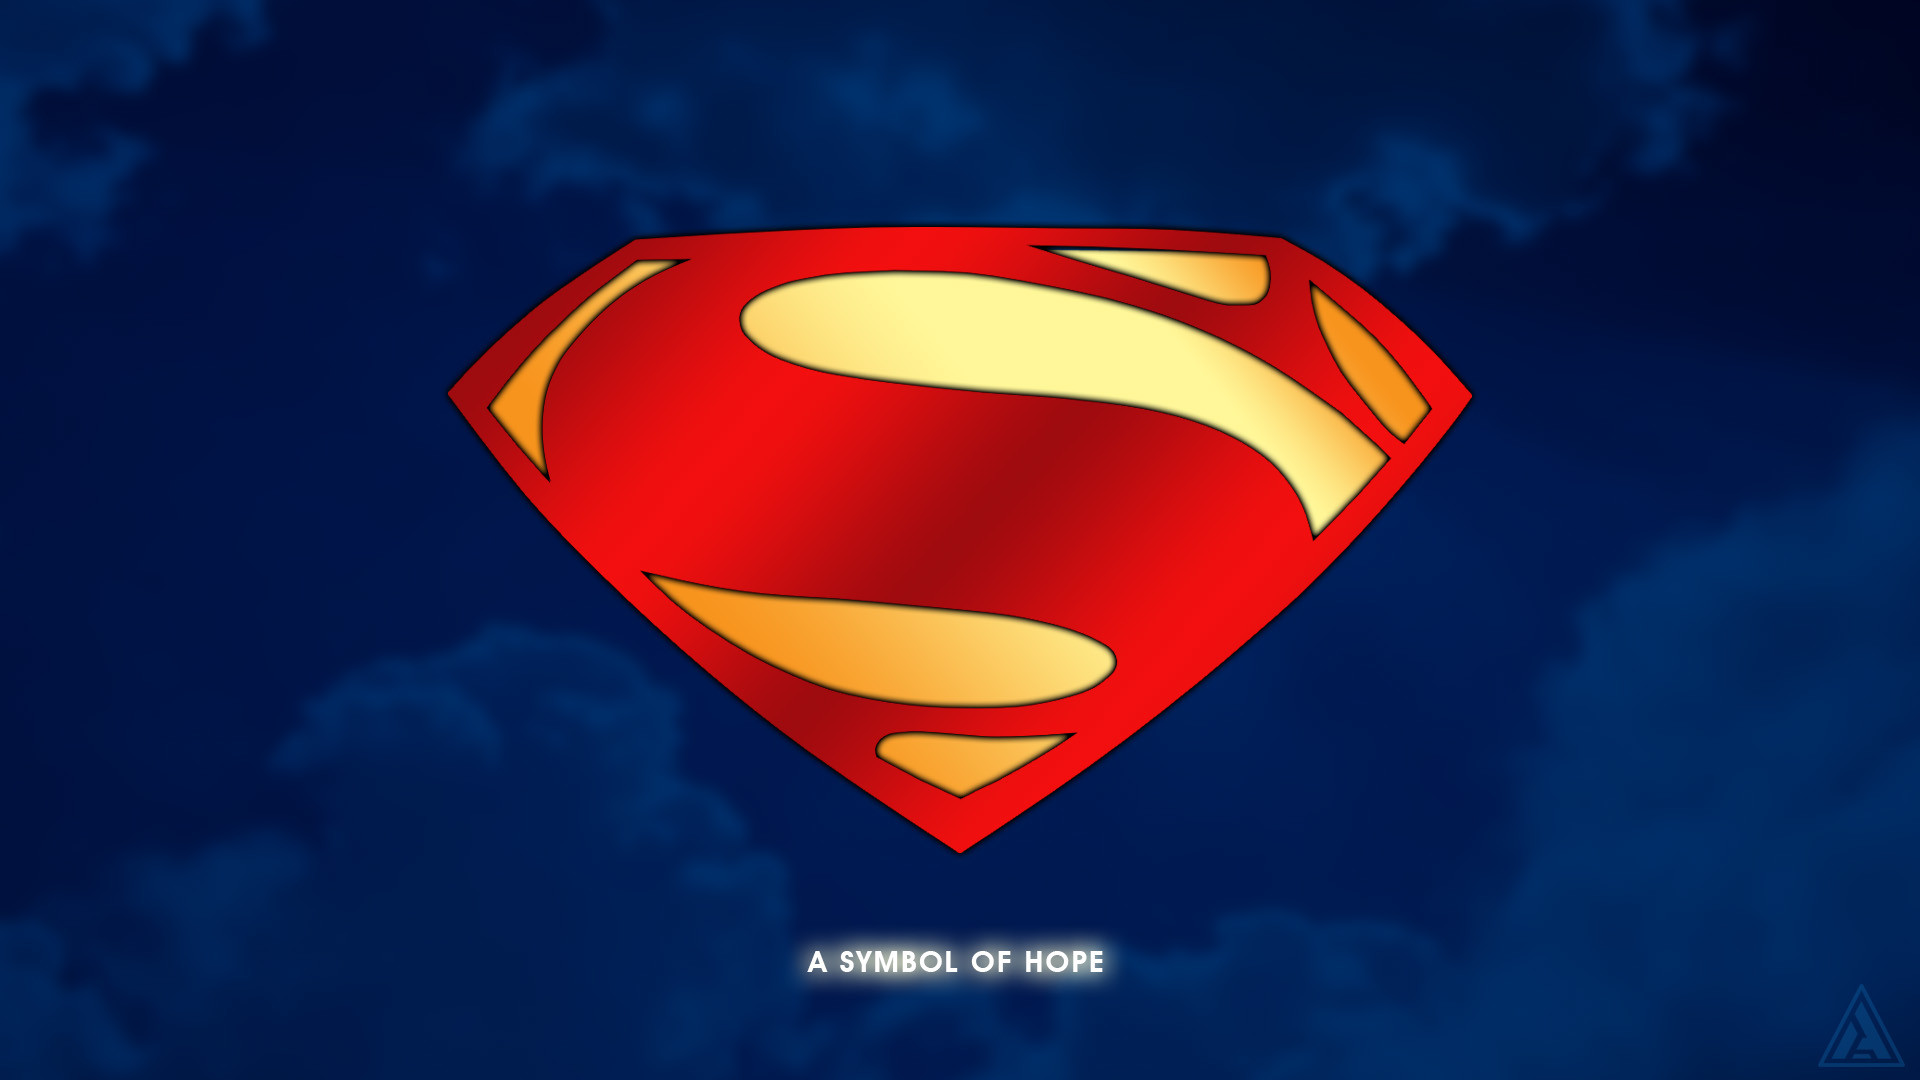 Supergirl Logo Wallpapers